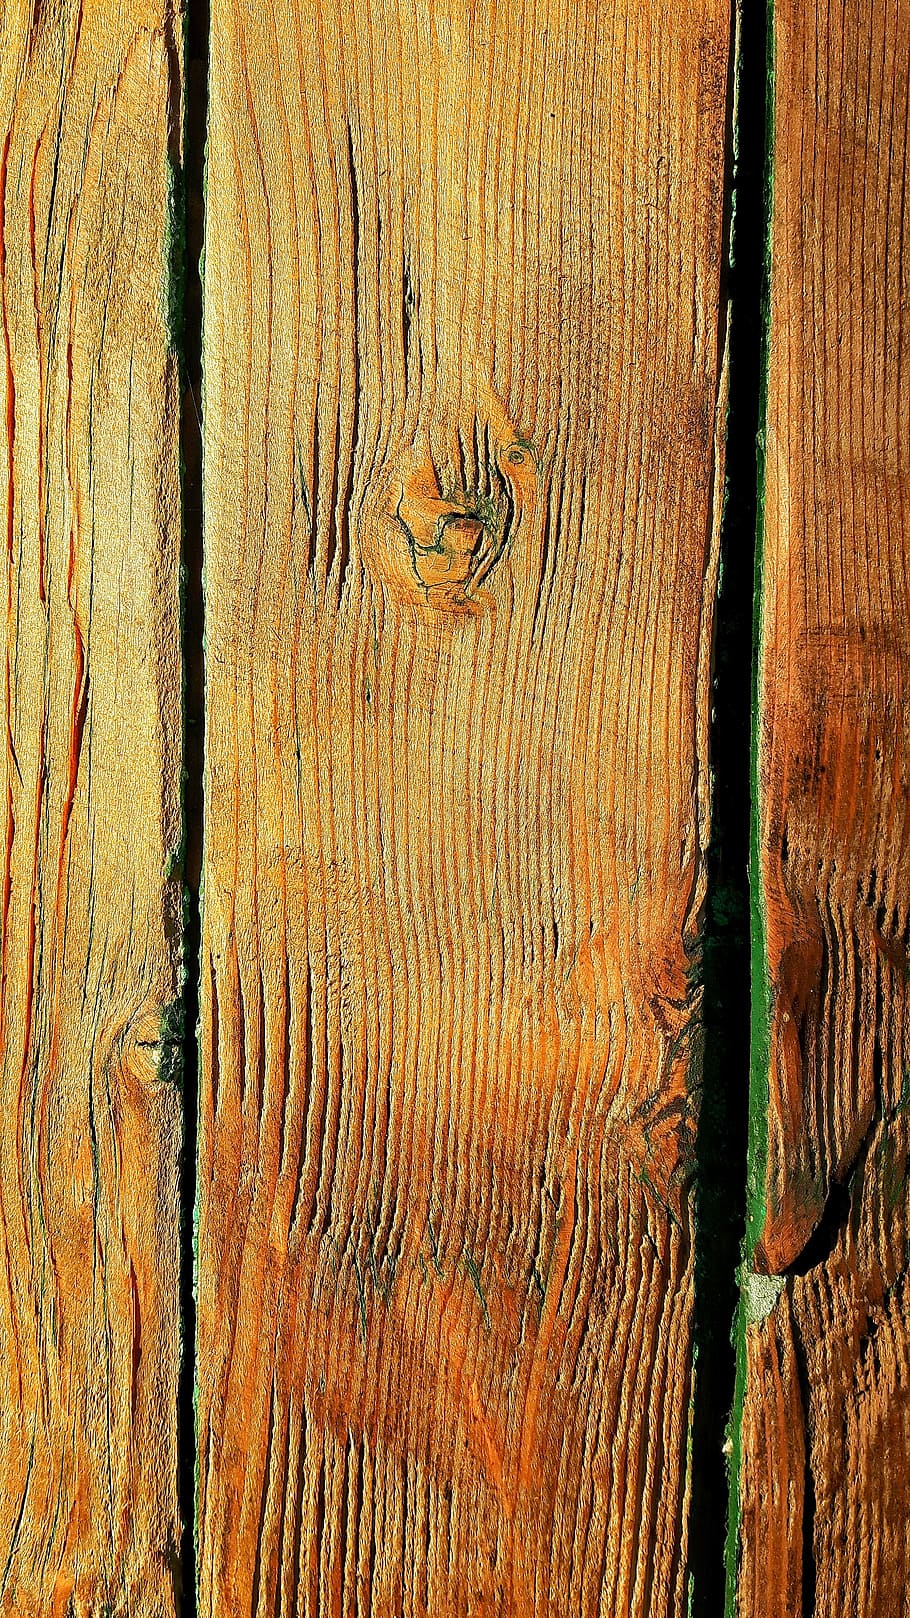 madera, textura, puerta, nodo, mobiliario, eje, antiguo, planta, fondos, madera - material